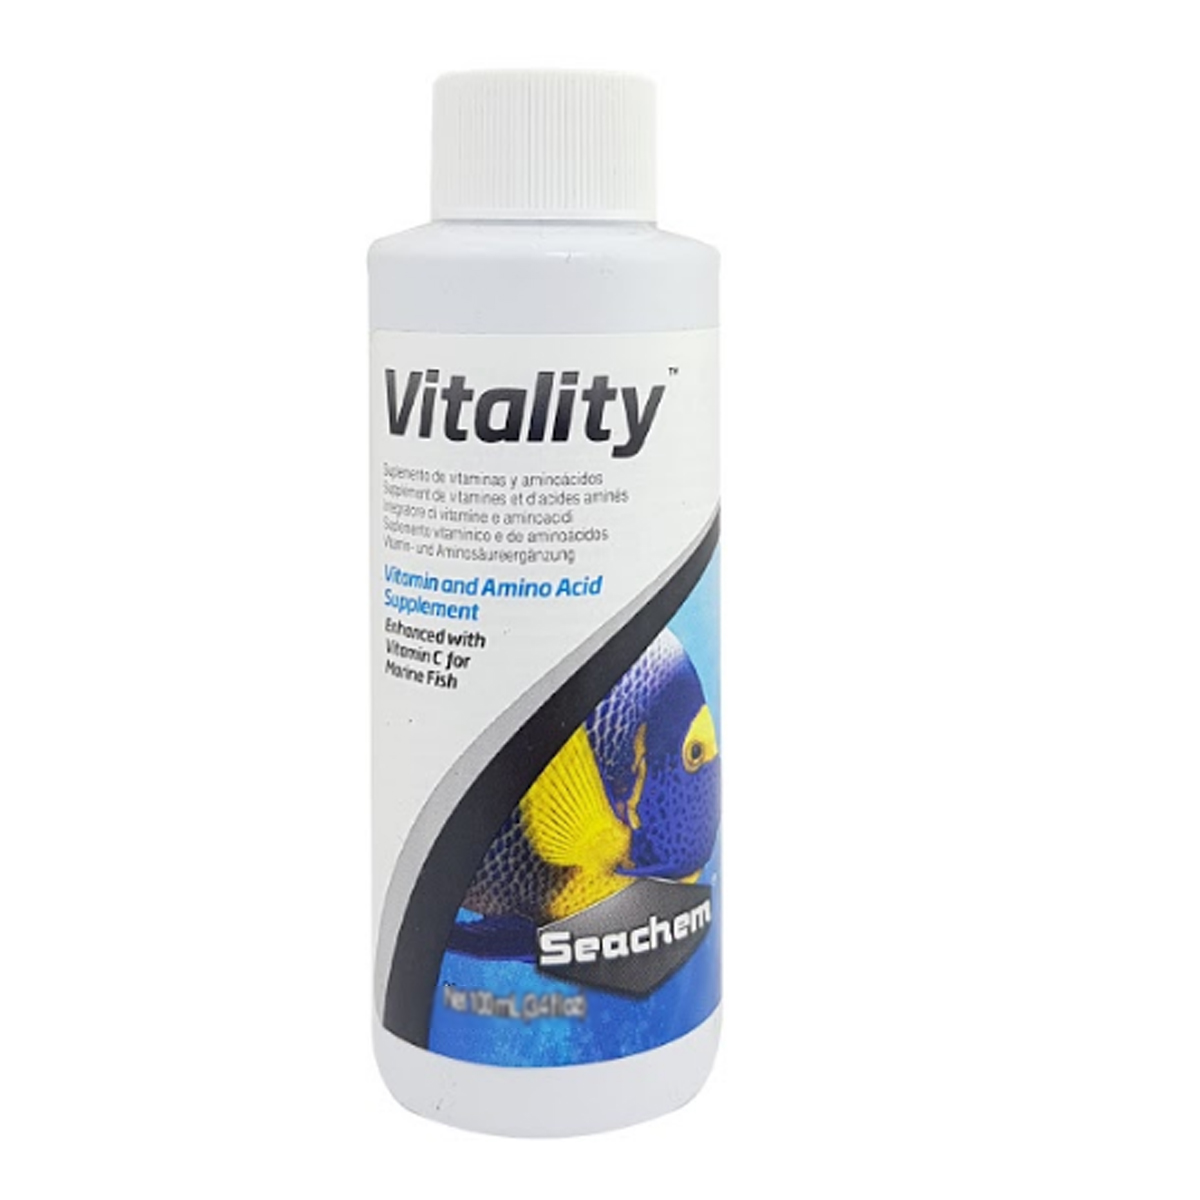 محلول مولتی ویتامین آبزیان سیچم کد 3241a مدل Seachem vitality حجم 50 میلی لیتر